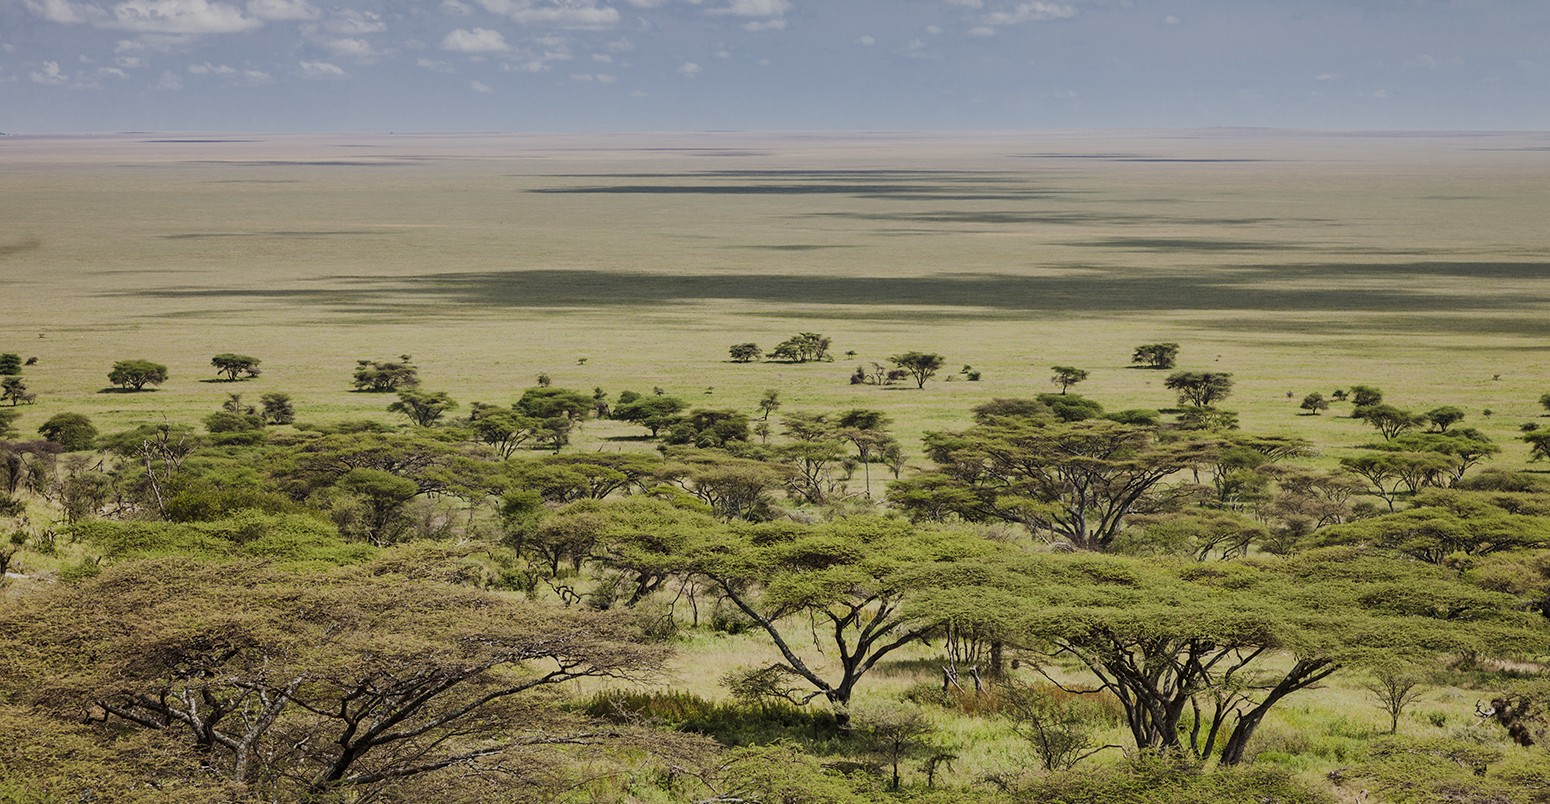 The plains of the Serengeti, Tanzania, Africa